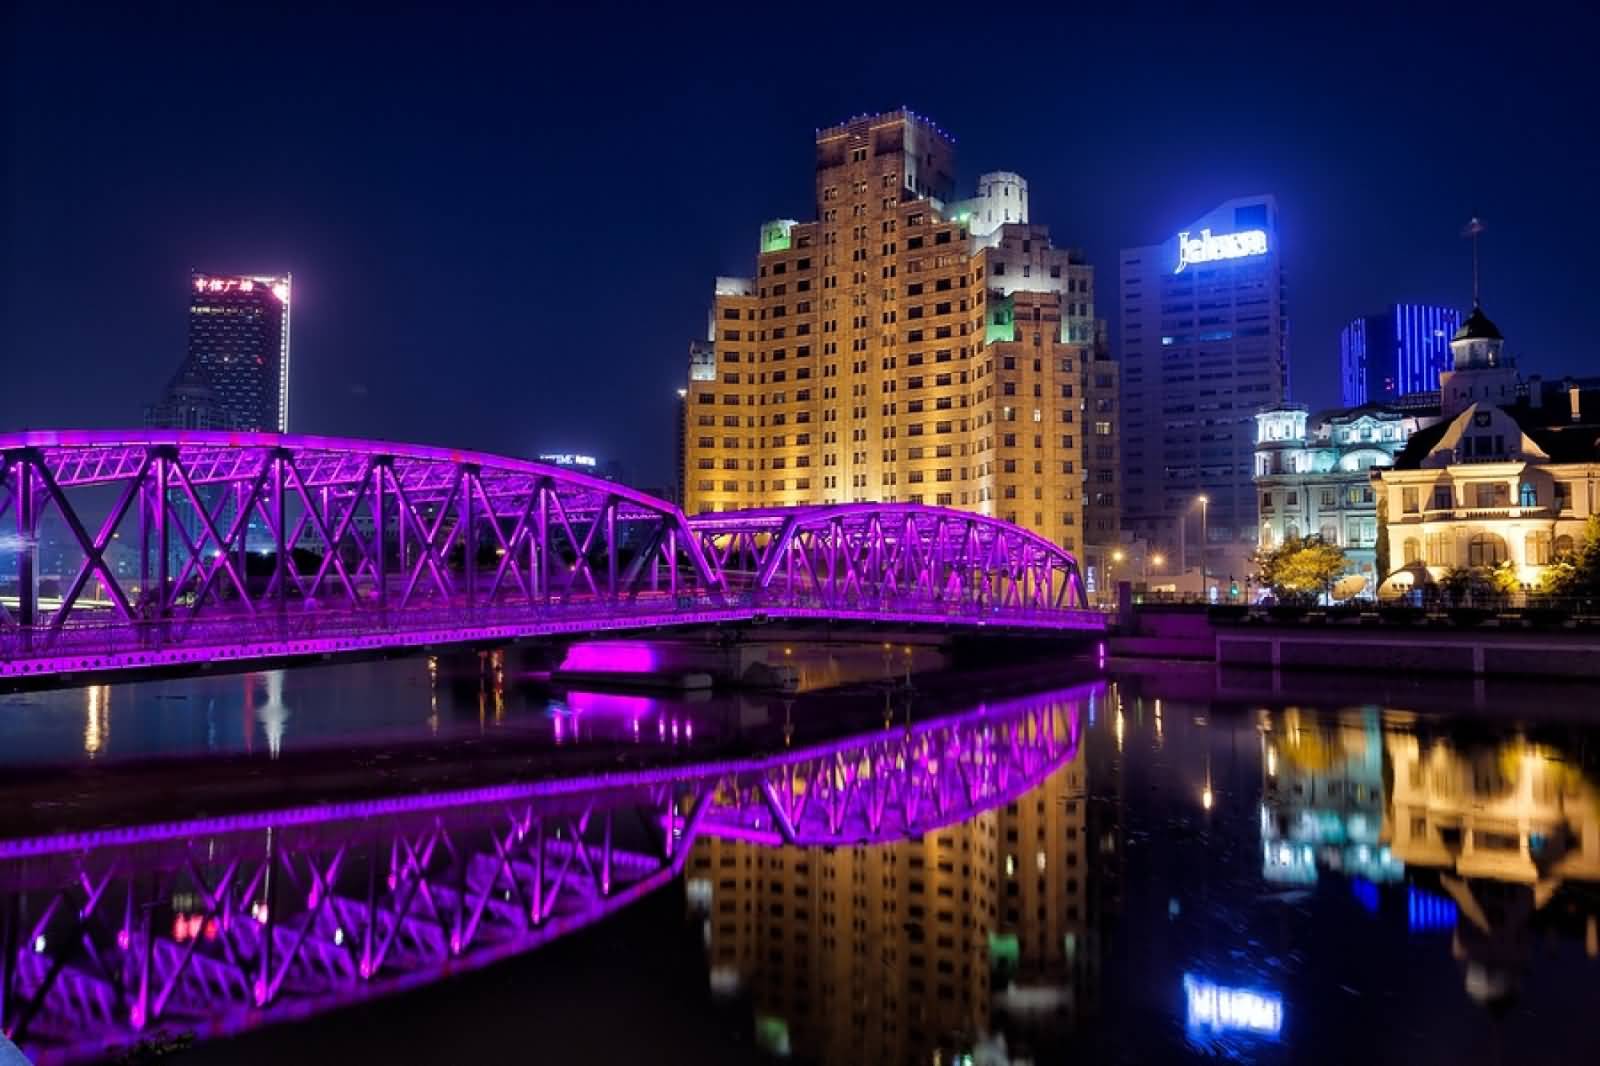 Waibaidu Bridge At Night With Pink Light s